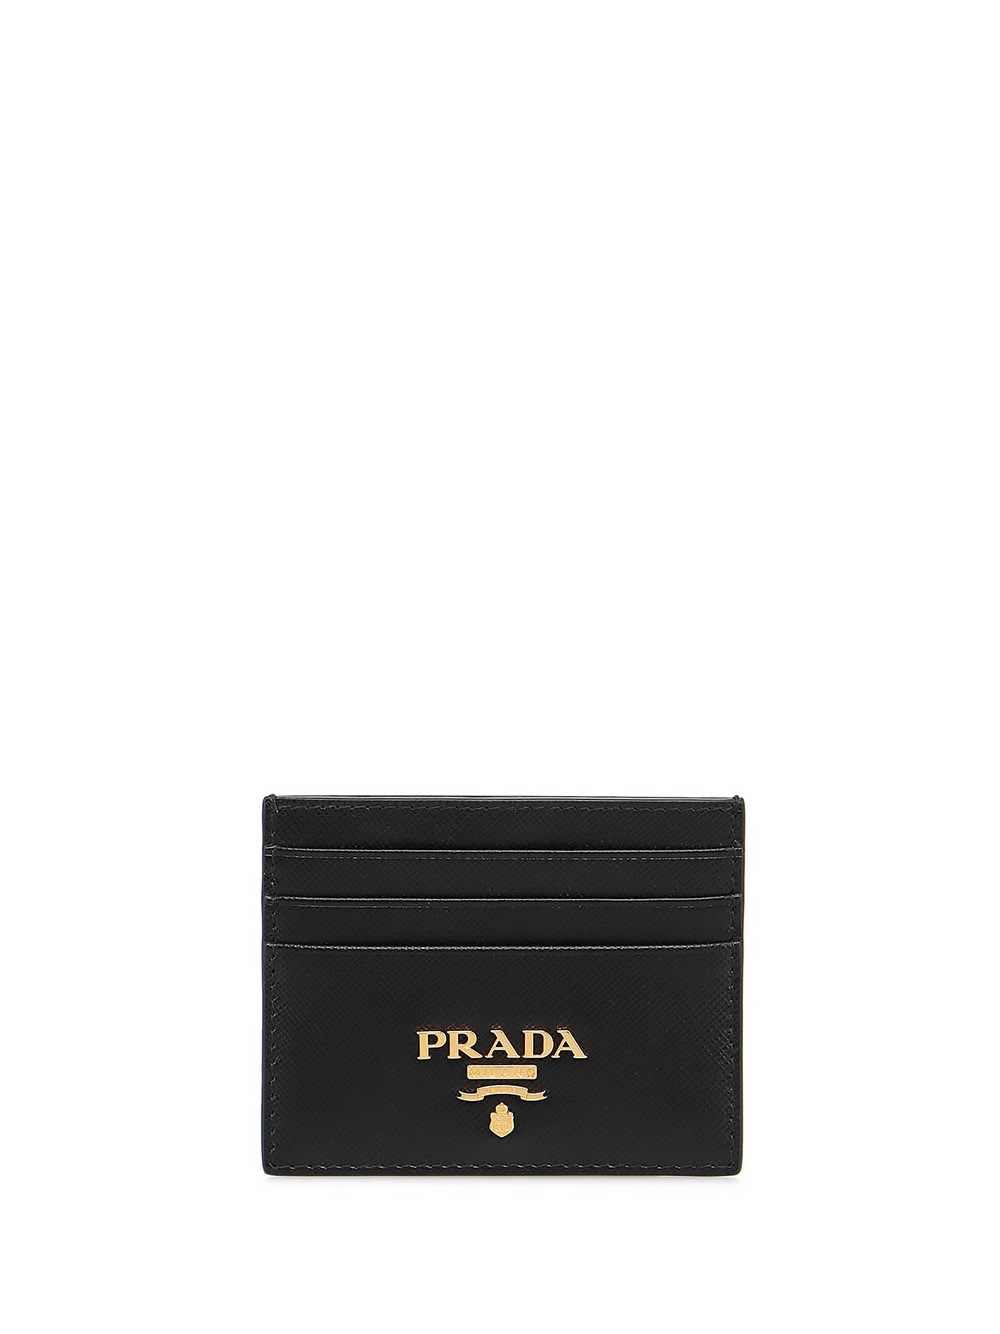 Prada Saffiano Leather Card Holder In Black  